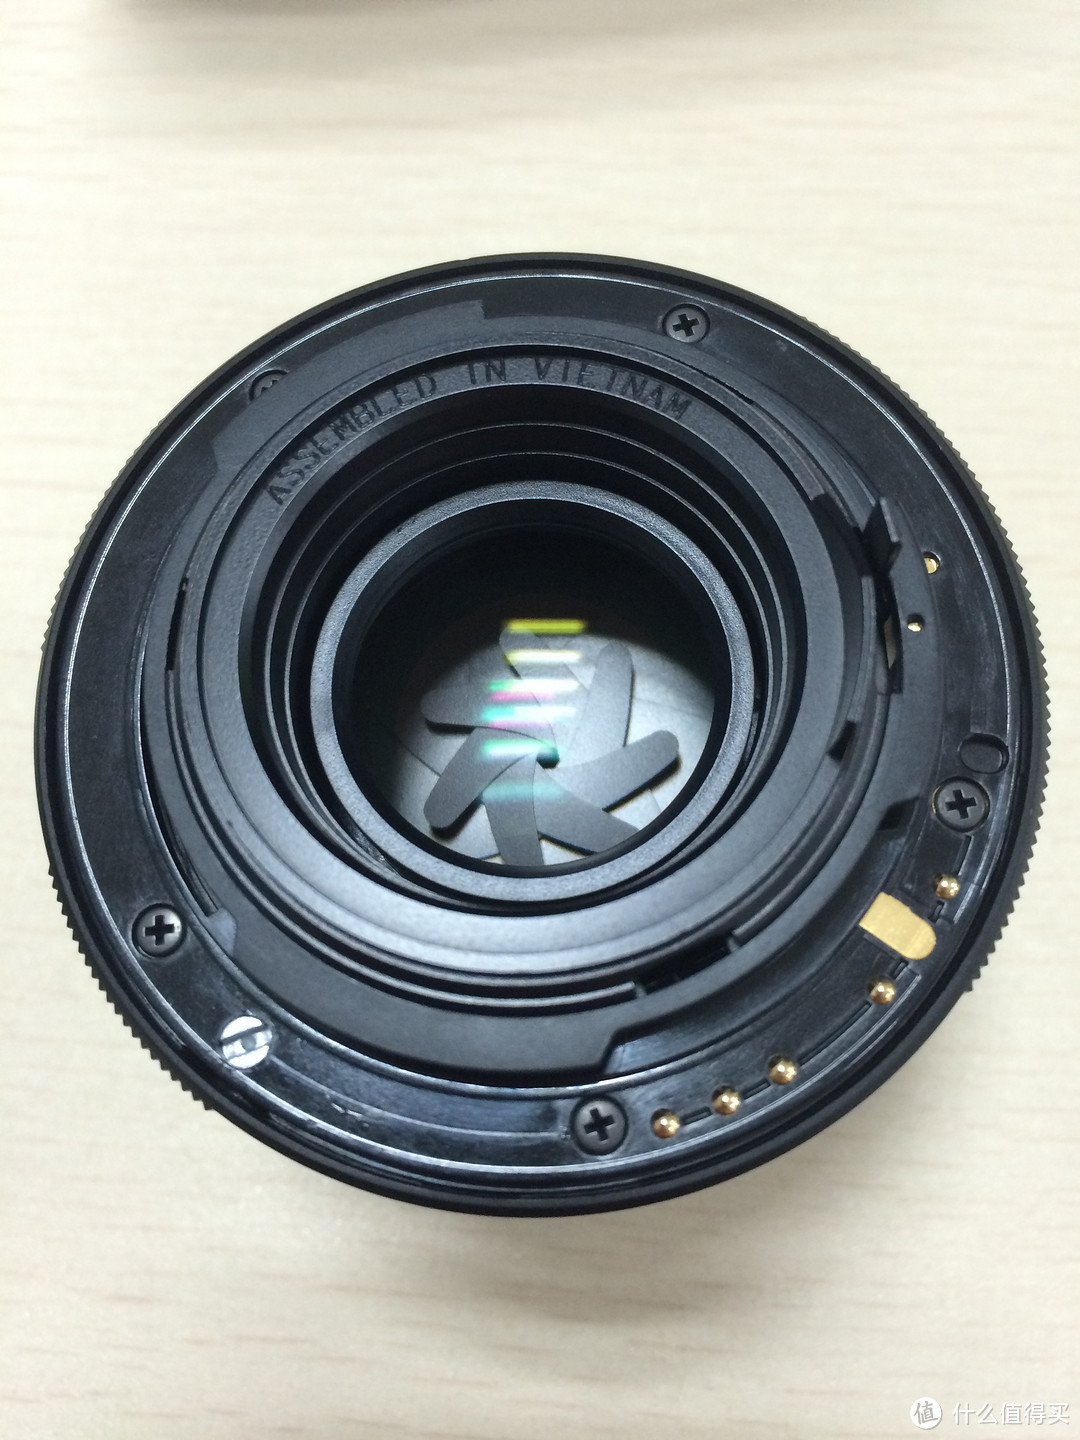 Pentax 宾得 DA50mm f1.8定焦镜头开箱